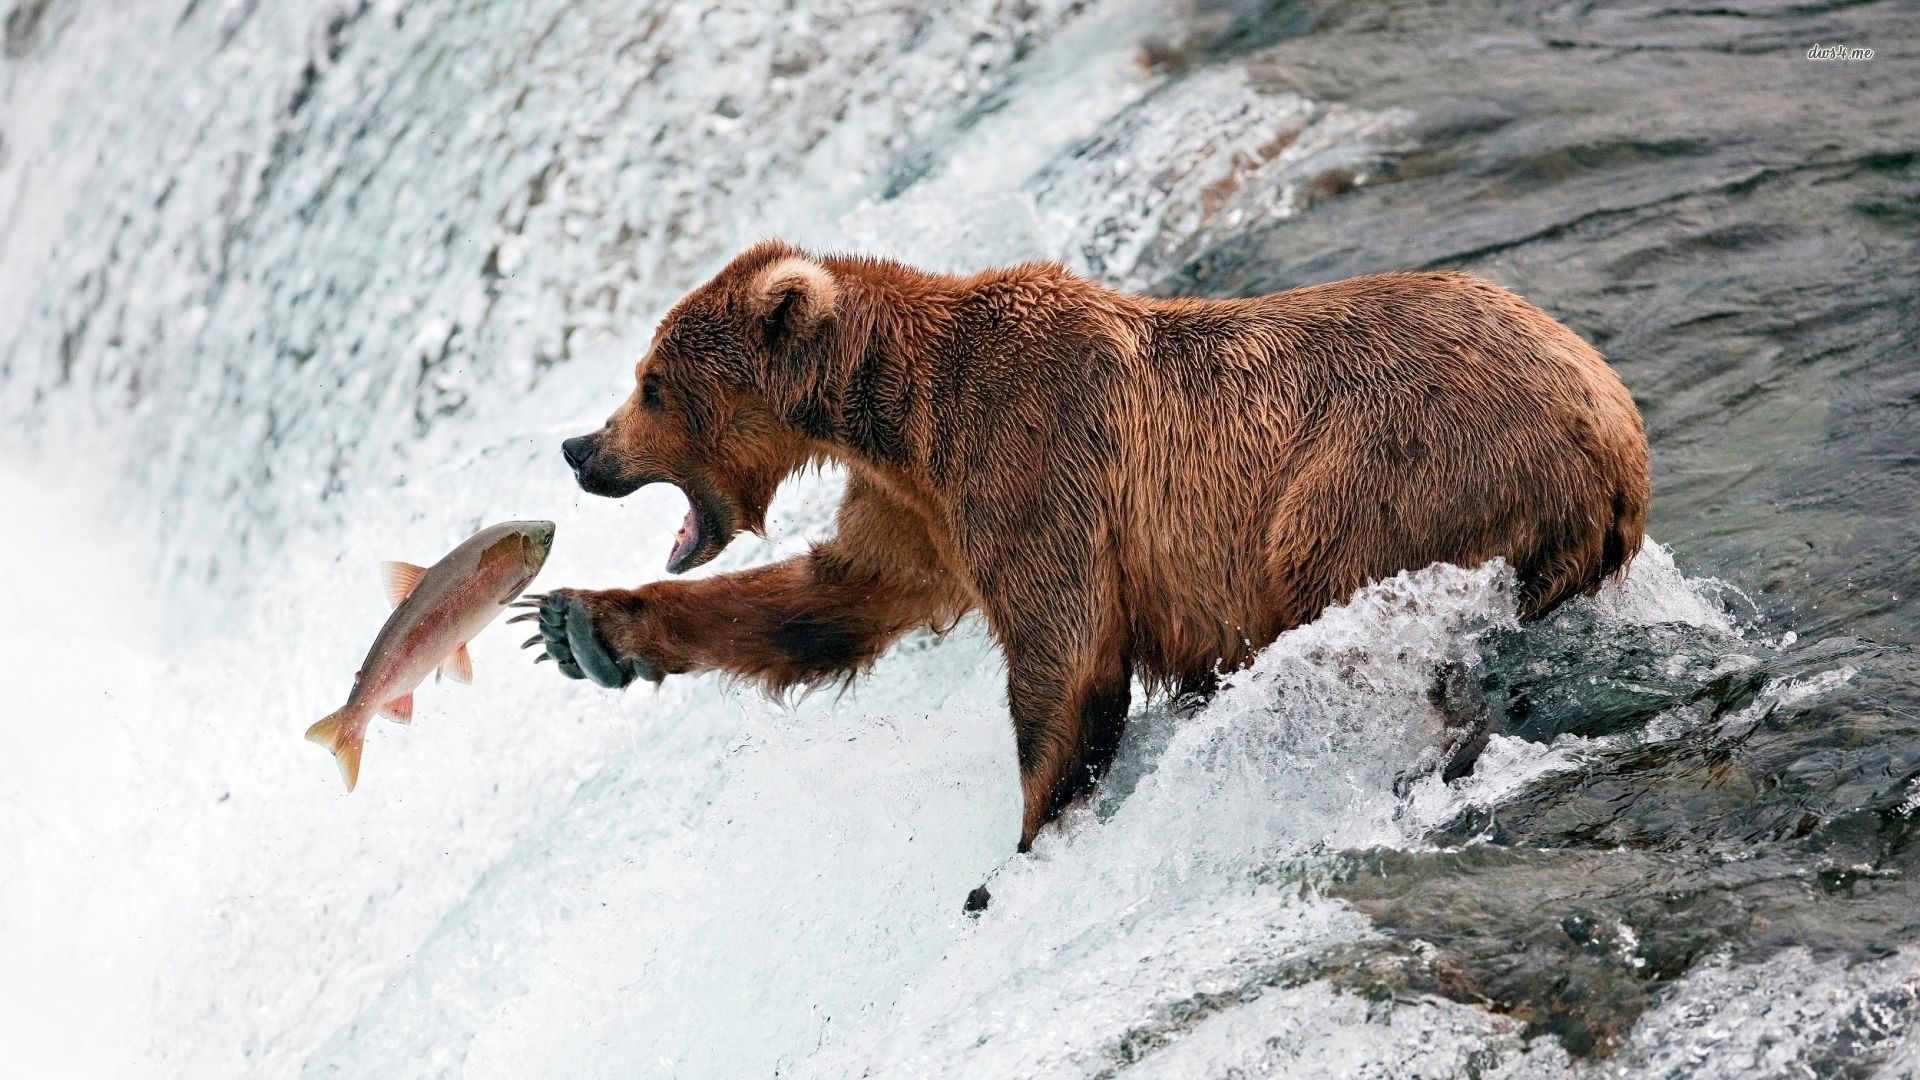 Brown bear fishing | Grizzly & Salmon | Pinterest | Brown bear, Fish ...